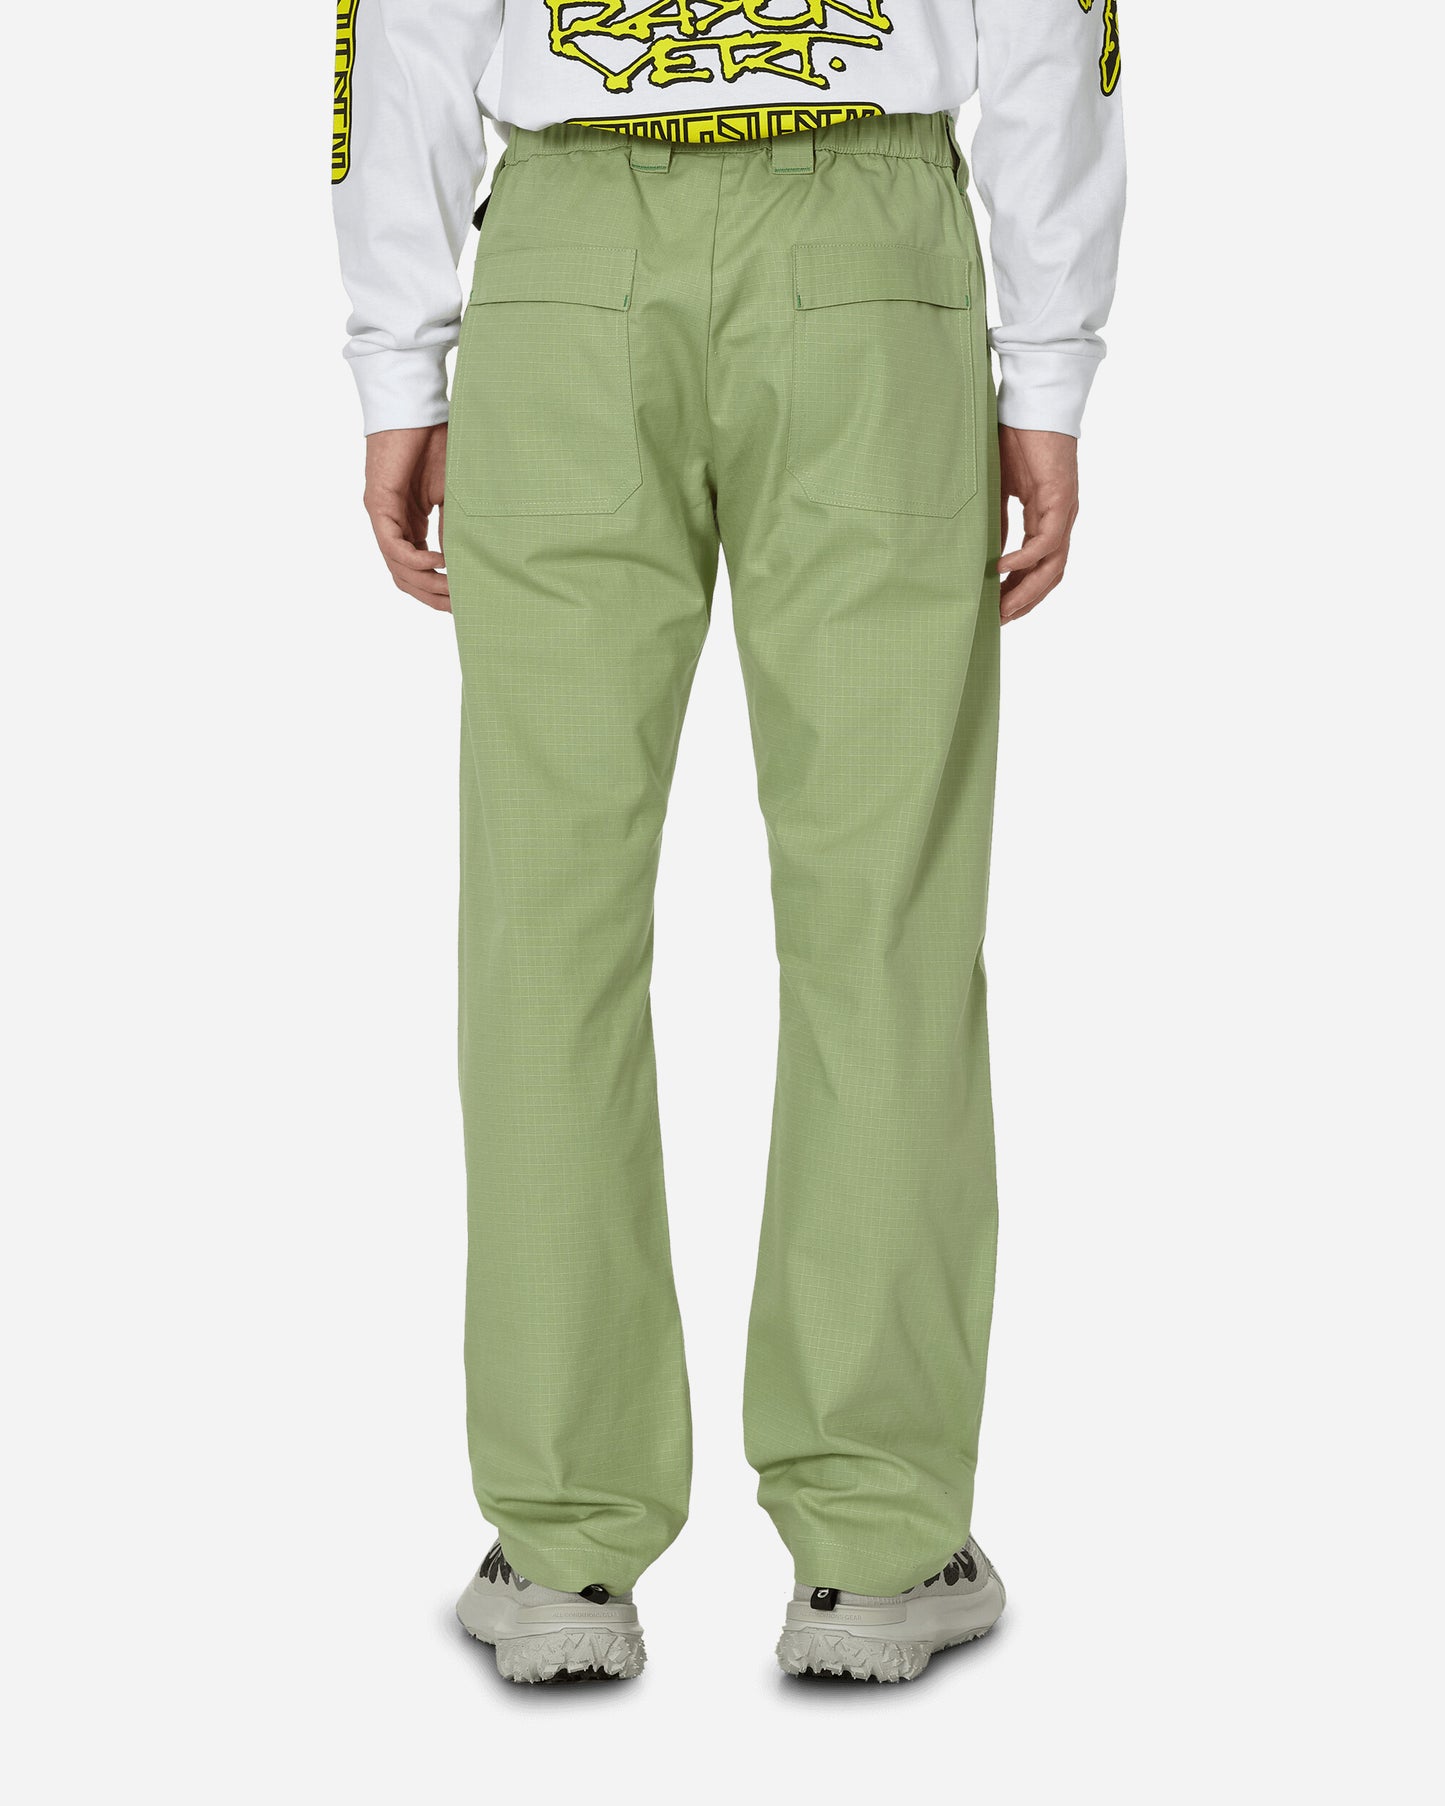 Rayon Vert Fubar Pants Og Sabre Green Pants Trousers RVS2-PT09 001